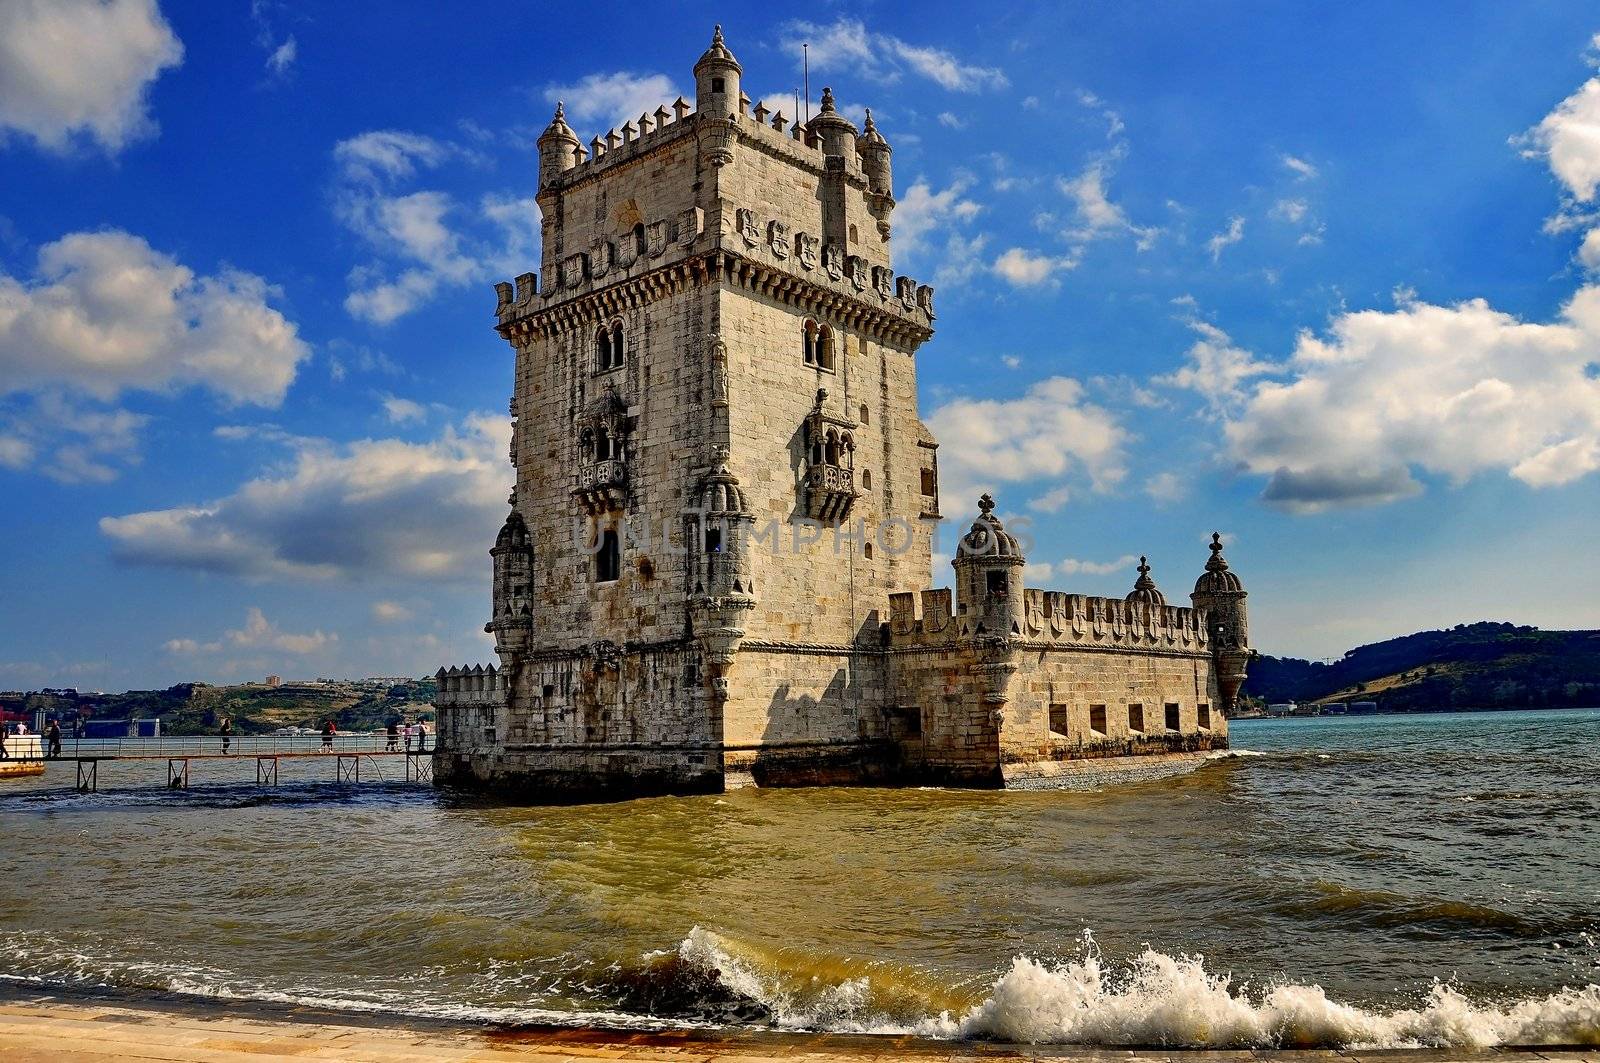 Belem Tower In Lisbon, Portugal by vas25